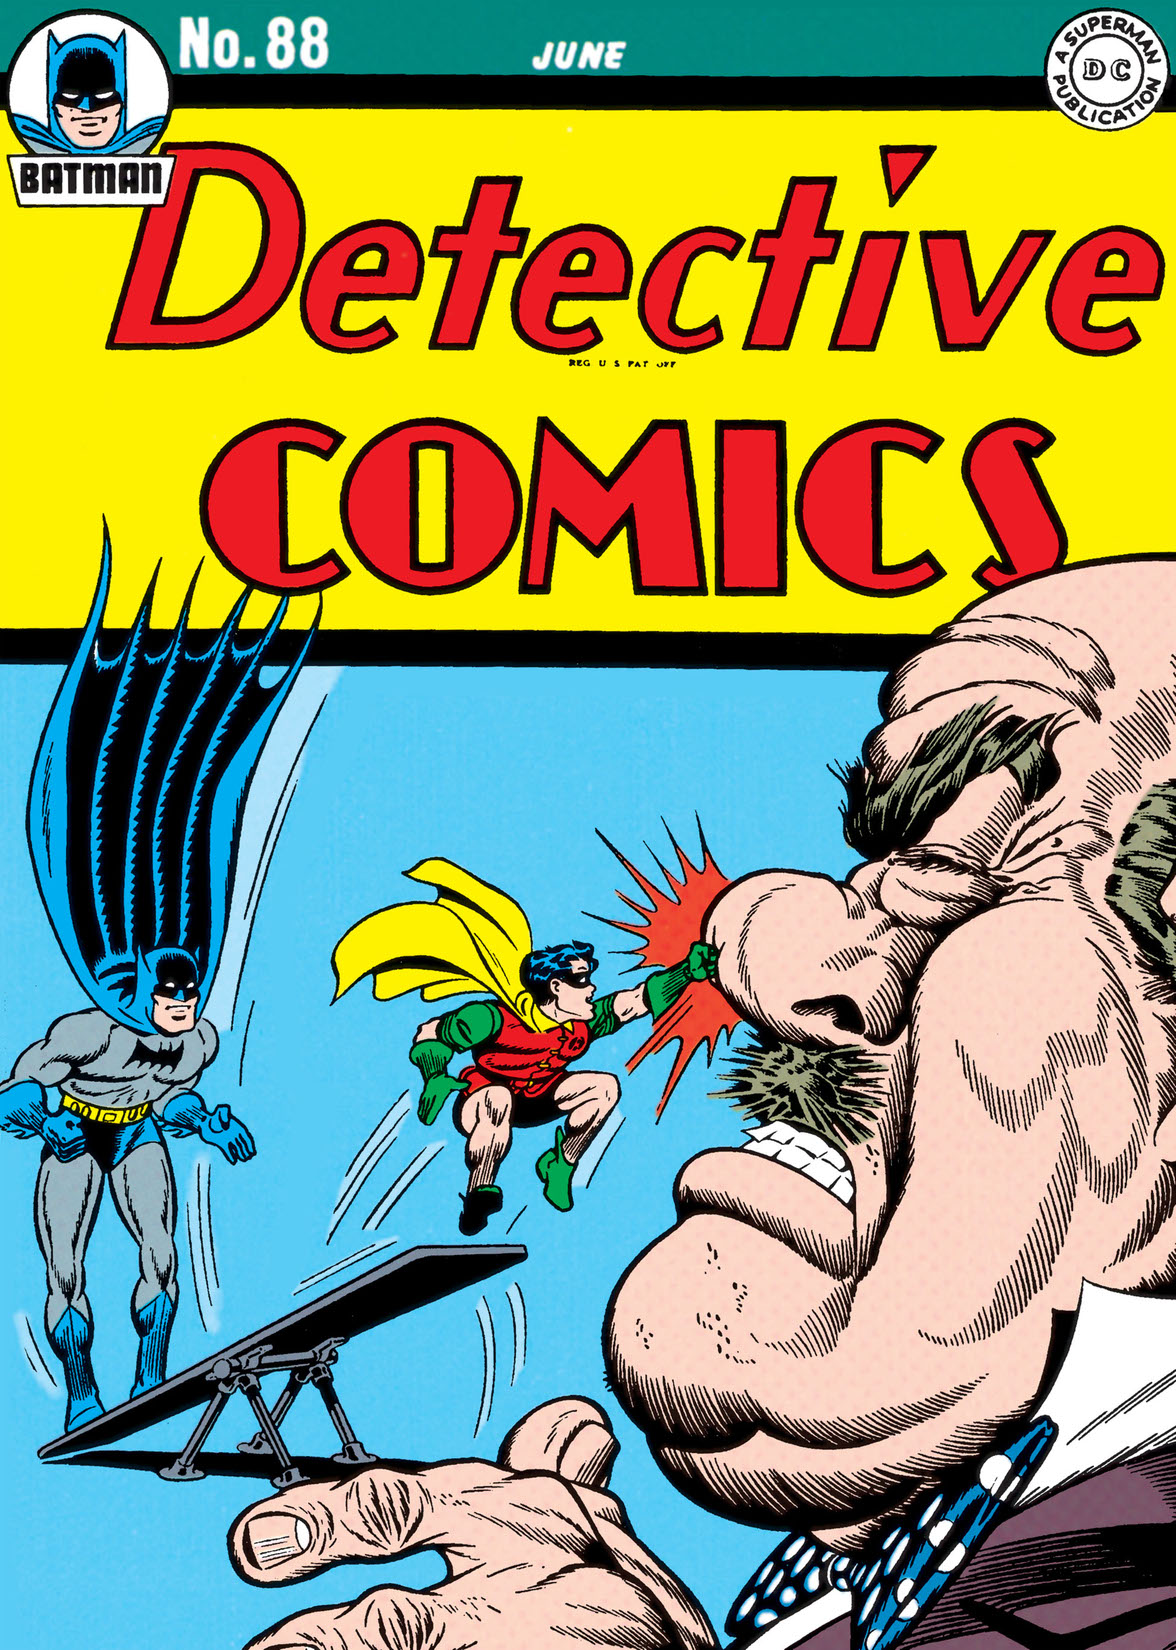 Detective Comics (1937-) #88 preview images